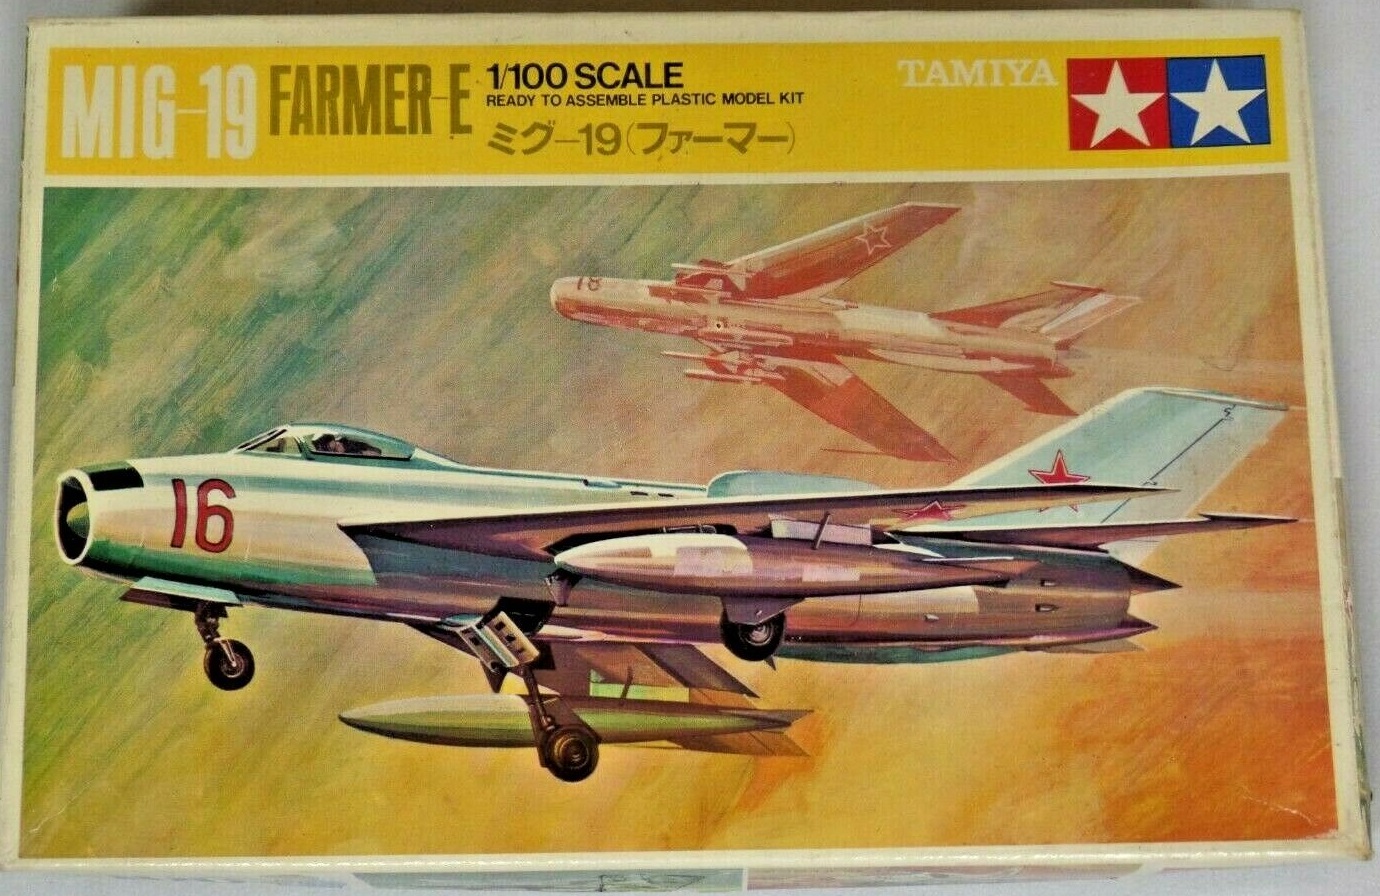 Mig-19 Farmer-E